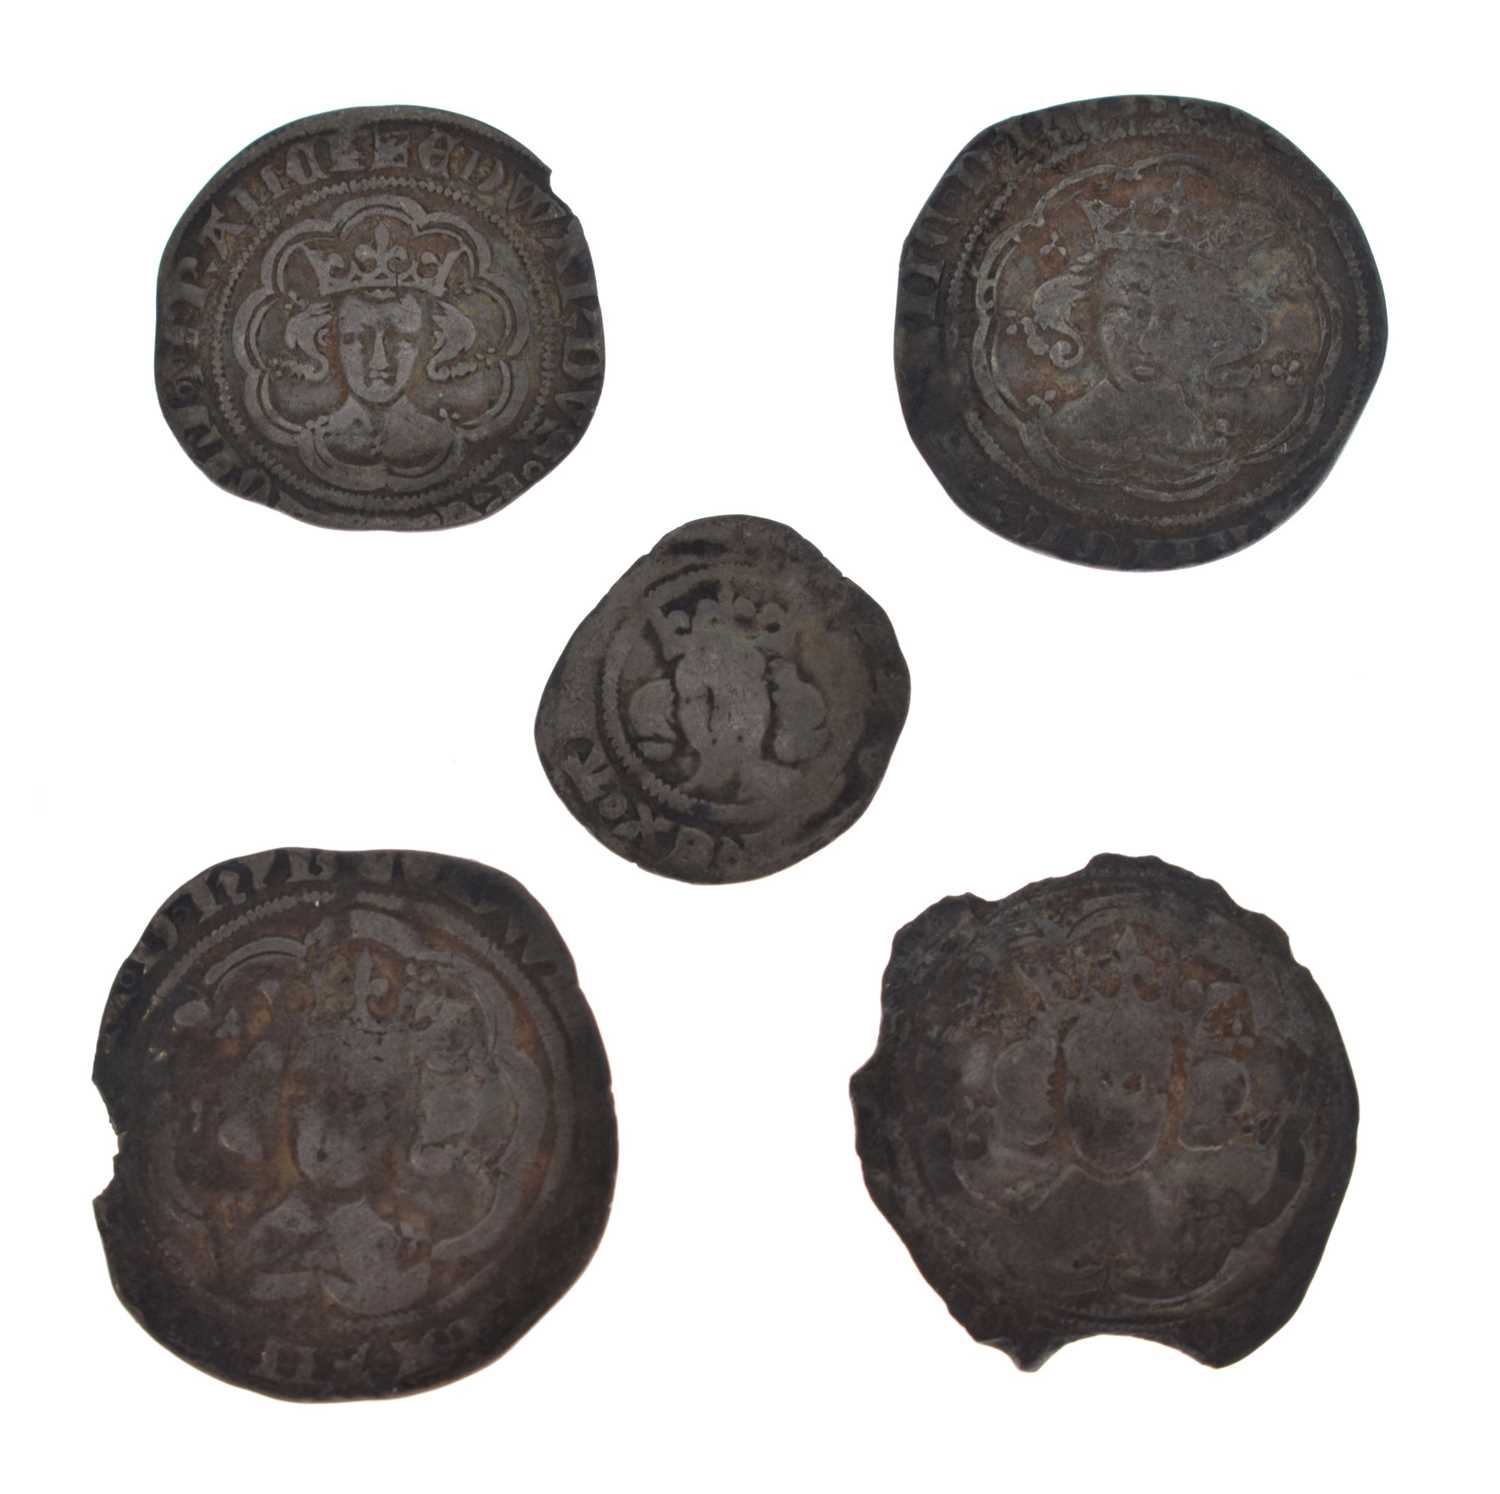 Five Edward III (1327-77) hammered coins